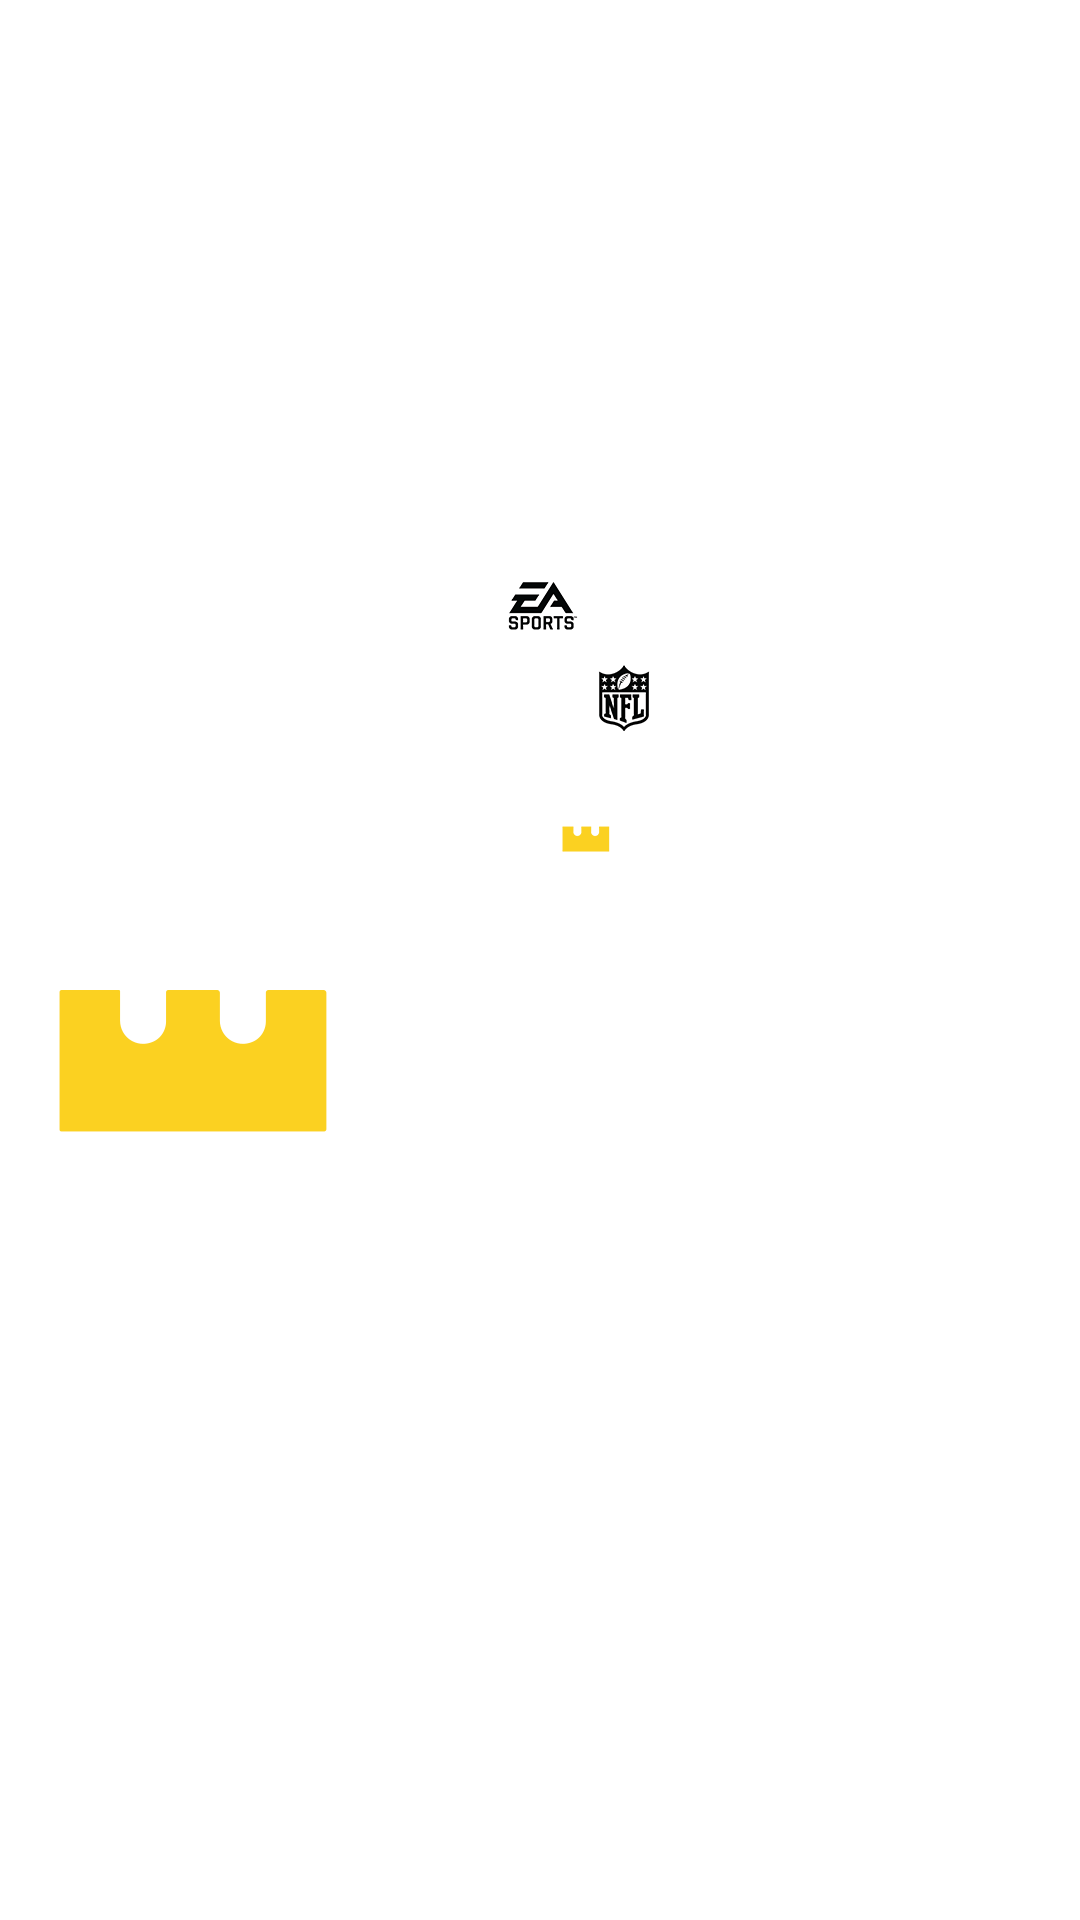 Noahupnxt - Madden NFL 24 Championship Series - Power Rankings